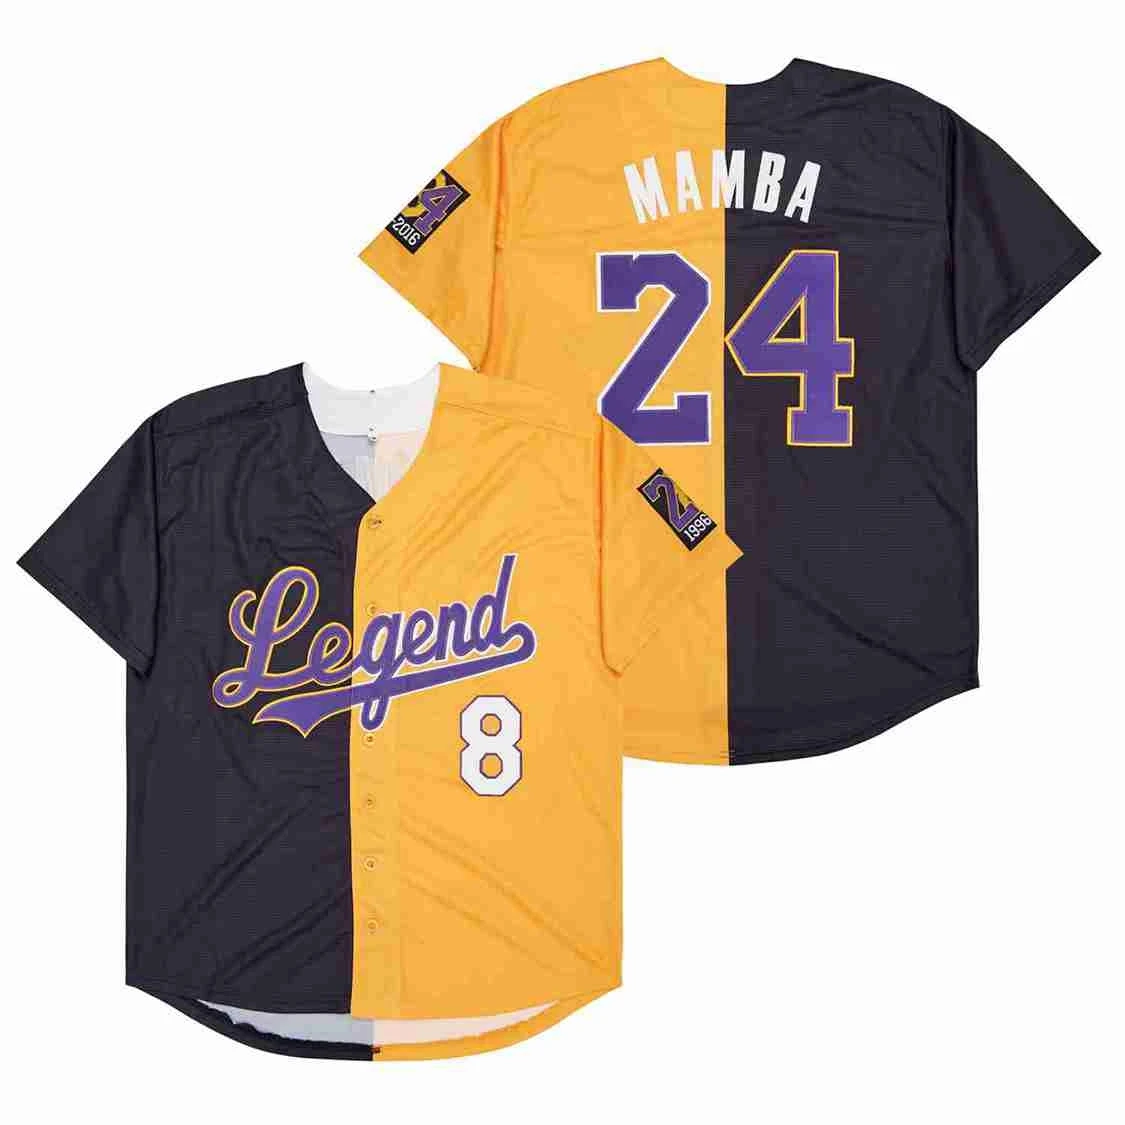 

BG baseball jerseys Legend 8-24 Mamba jersey Outdoor sportswear Embroidery sewing Street culture black yellow Split style